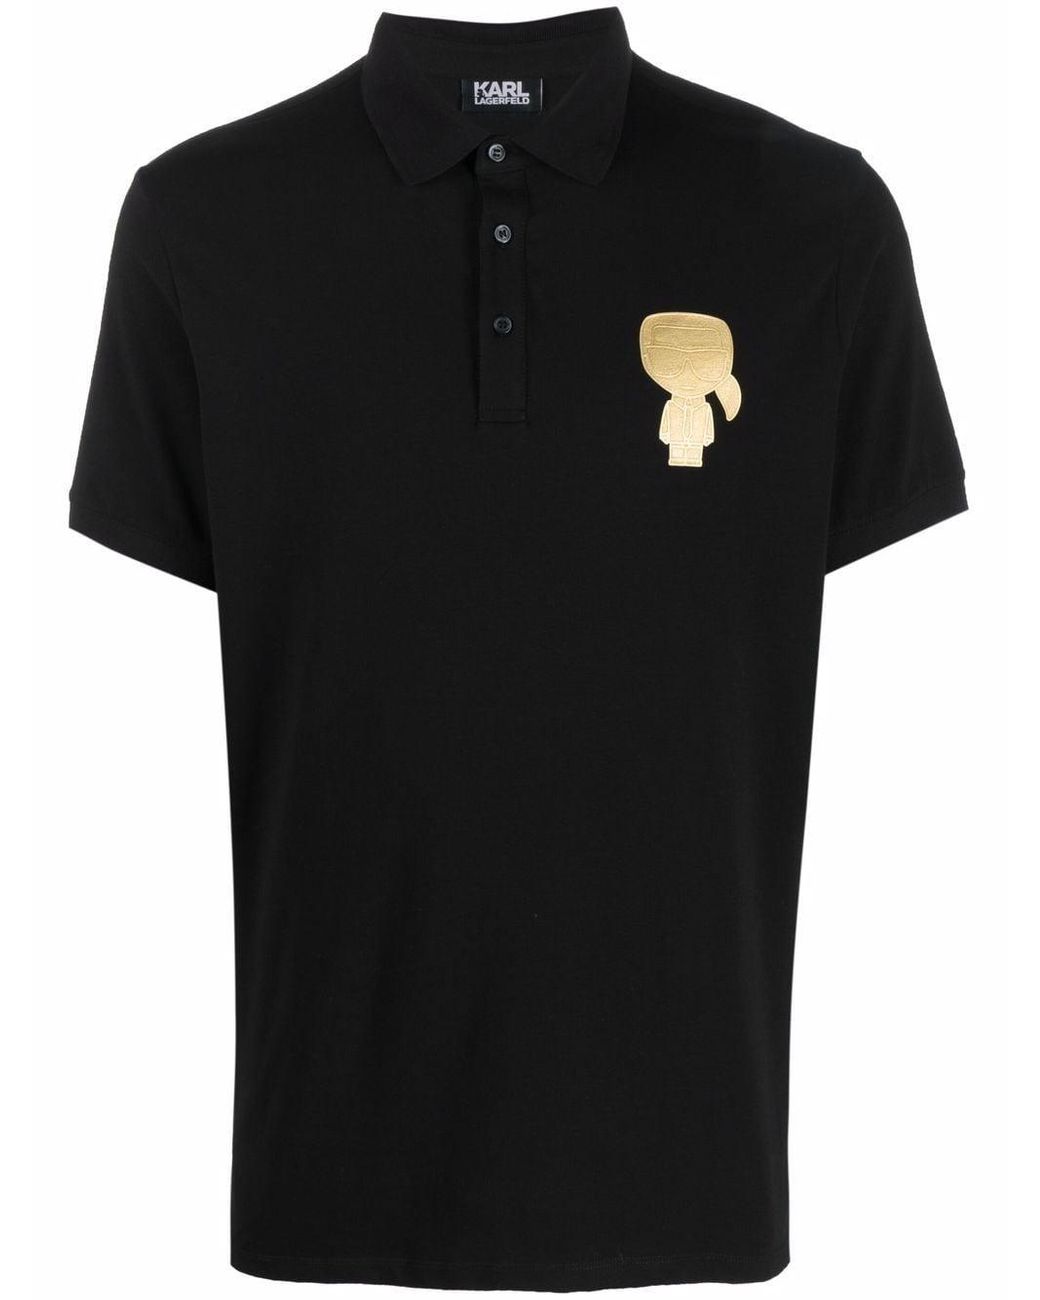 Karl Lagerfeld Cotton Karl Motif Polo Shirt in Black for Men - Lyst